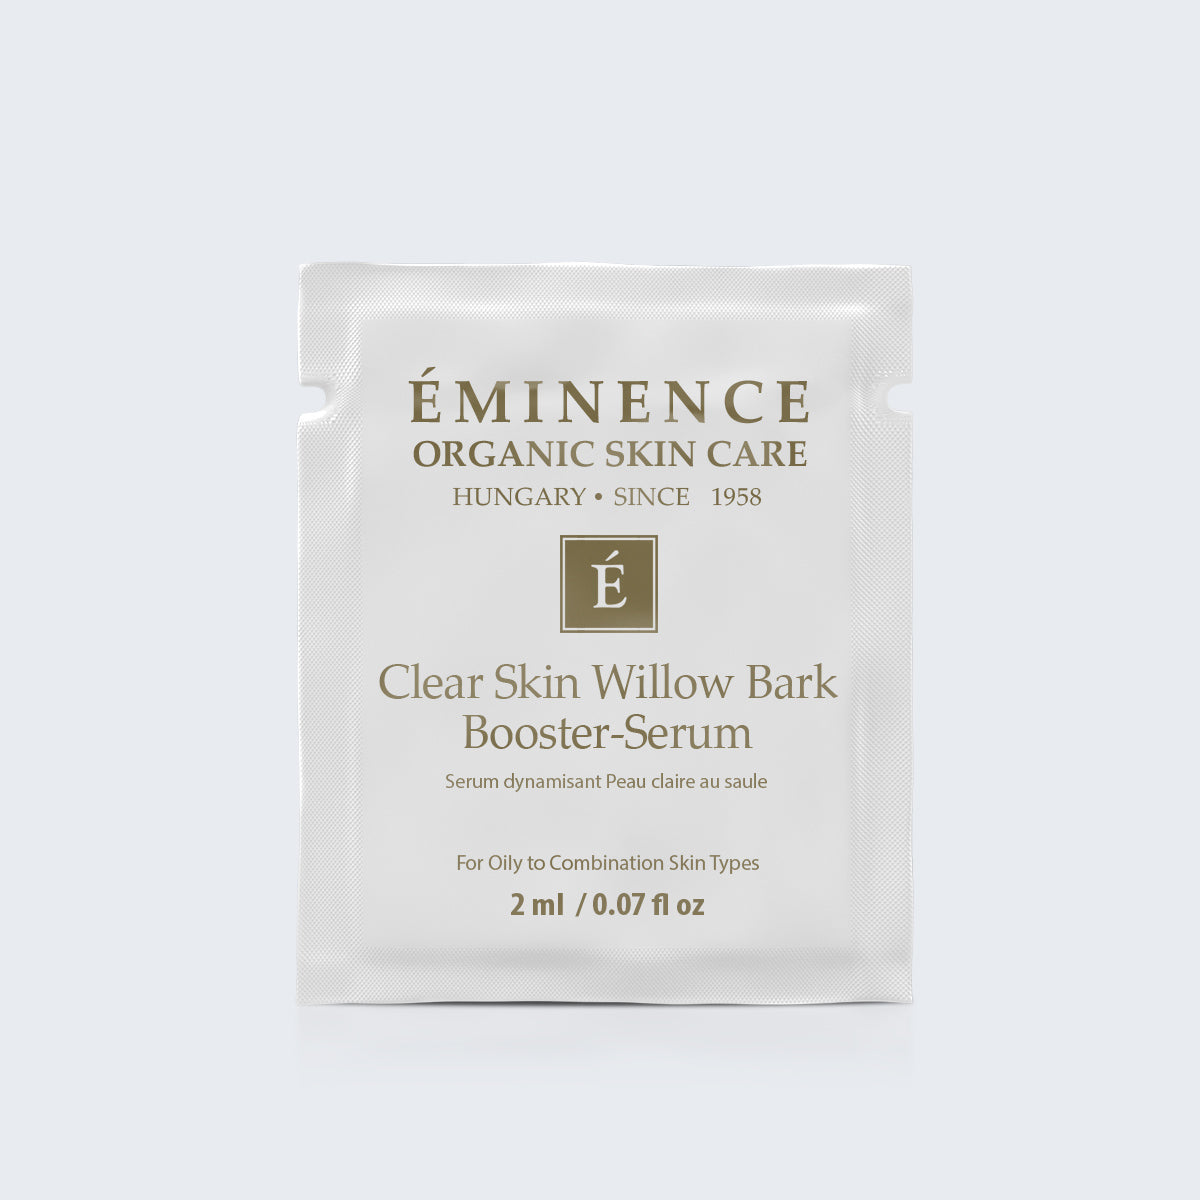 Eminence Organics Clear Skin Willow Bark Booster-Serum Card Sample